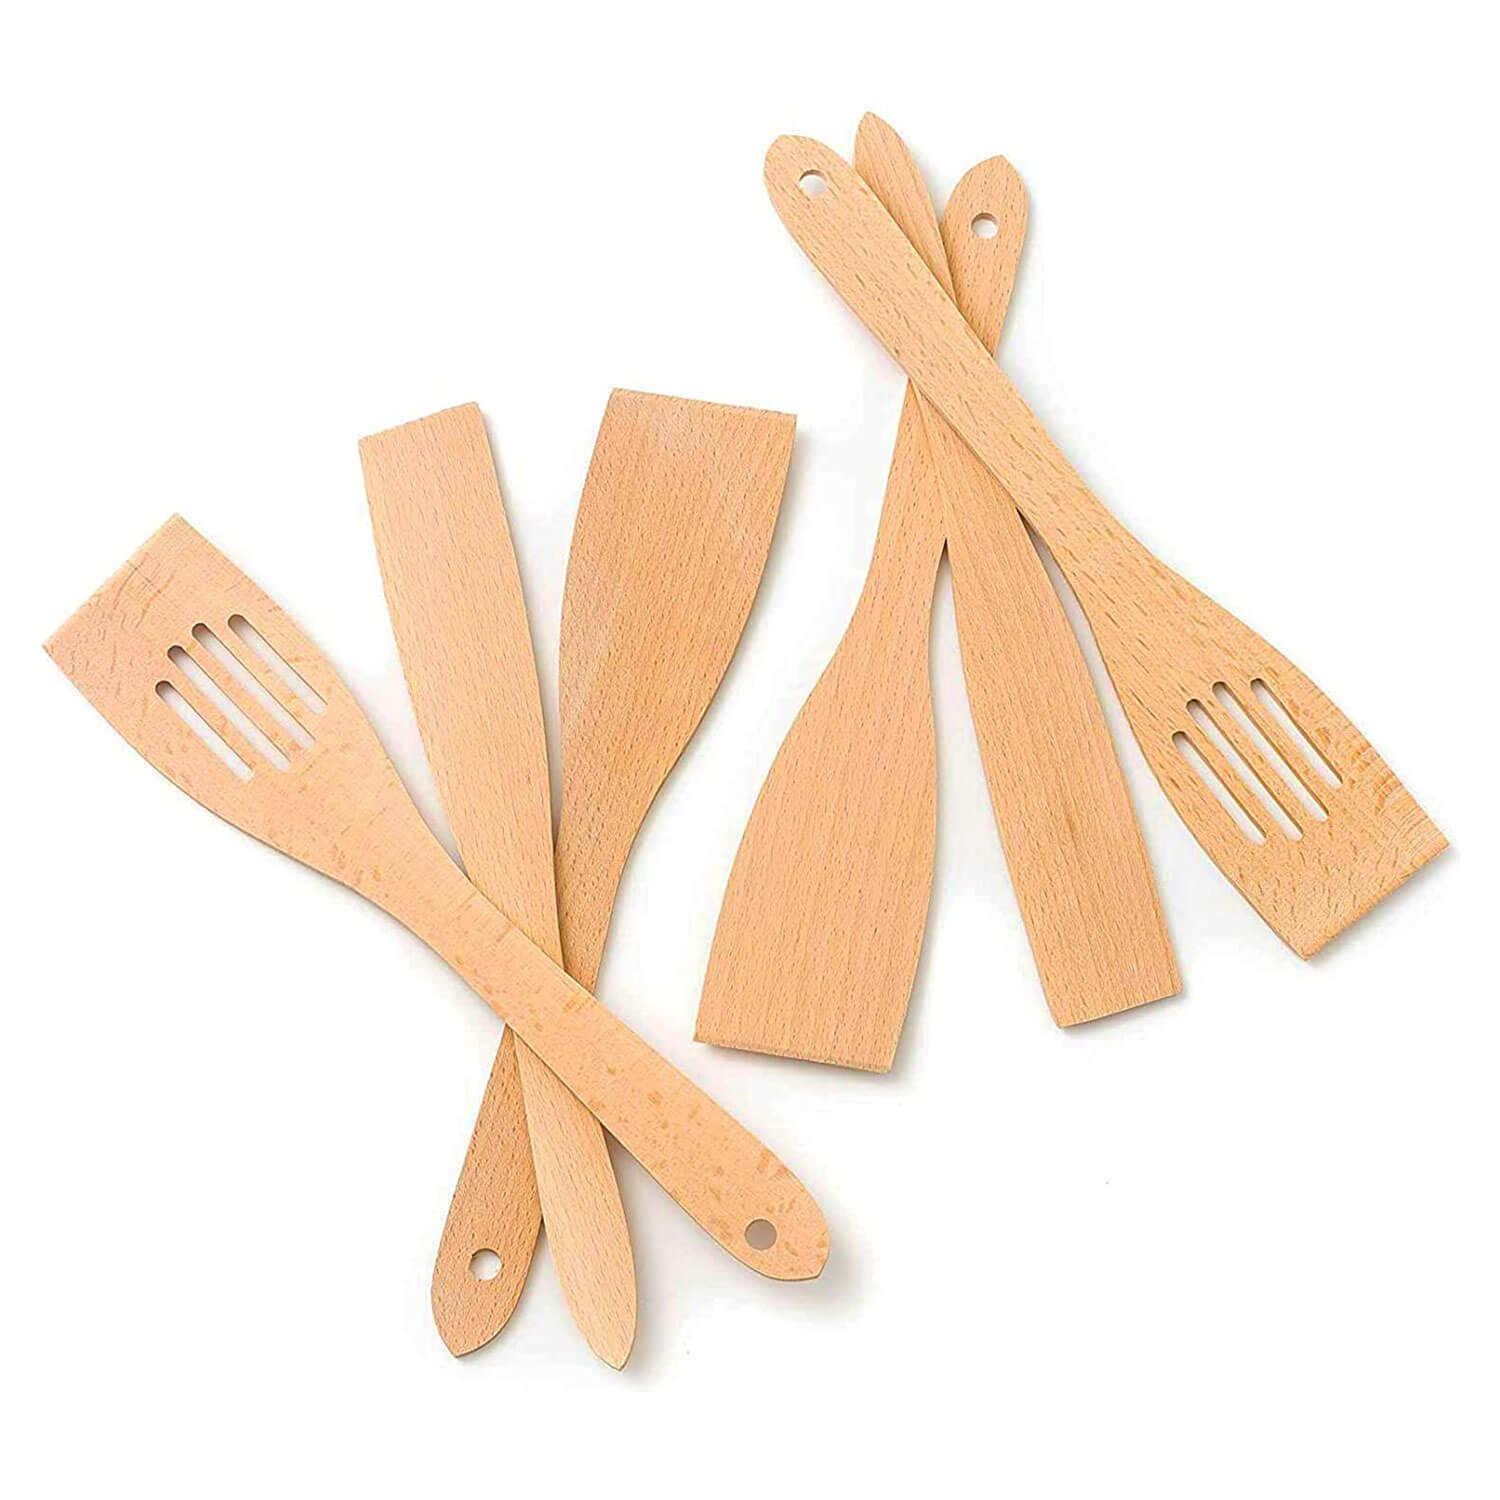 https://cdn.shopify.com/s/files/1/0515/2440/3381/products/6-piece-wooden-kitchen-spatula-set-30cm-length-tuuli-242.jpg